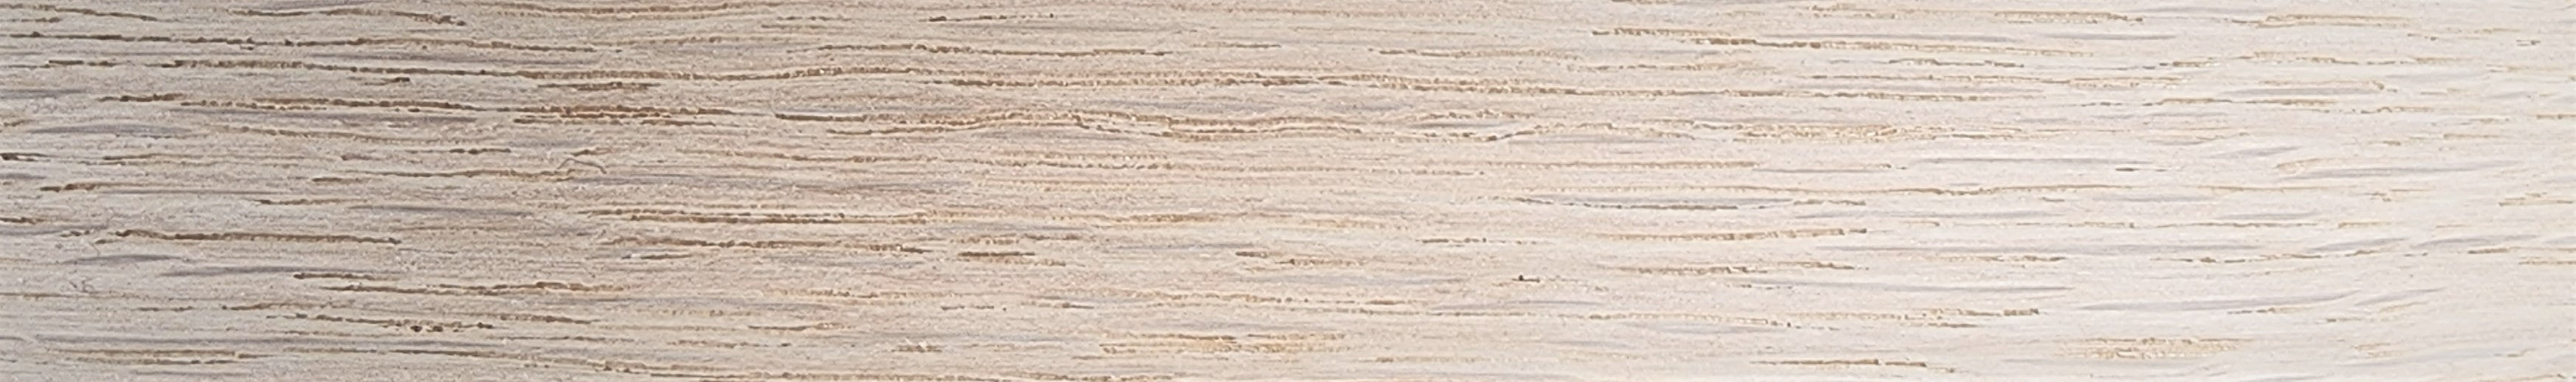 European Oak Unglued Thick Wood Edging / Lipping 24mm x 2mm